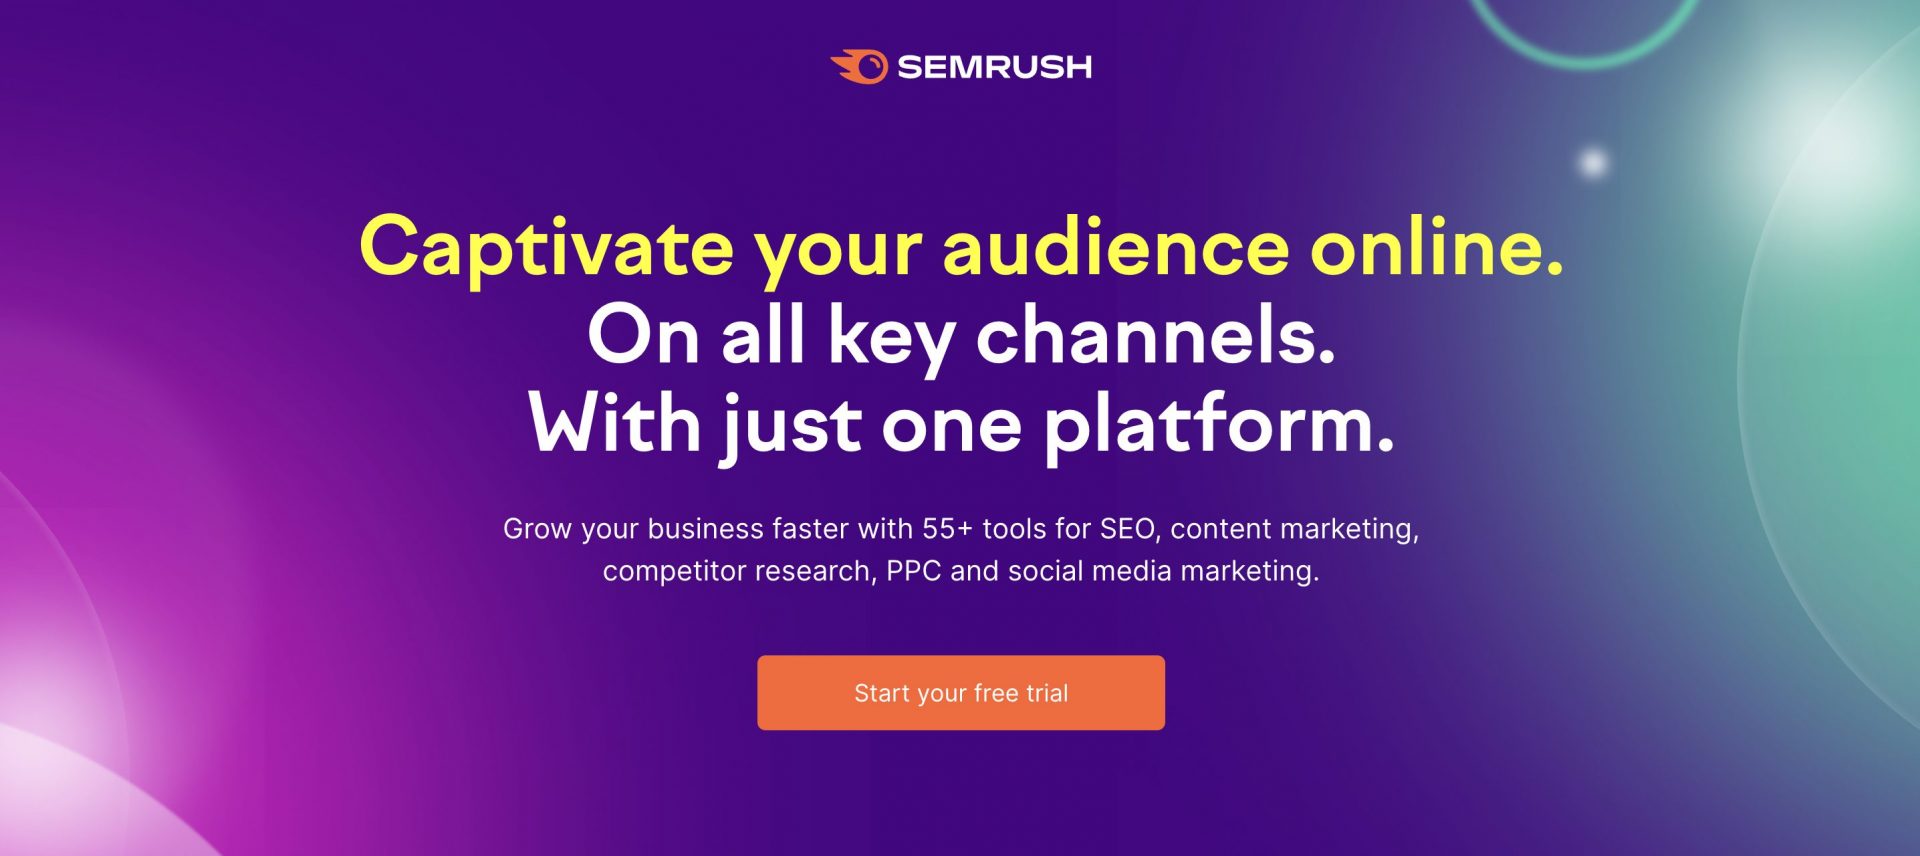 SEO Tools For Digital Marketing SEMrush